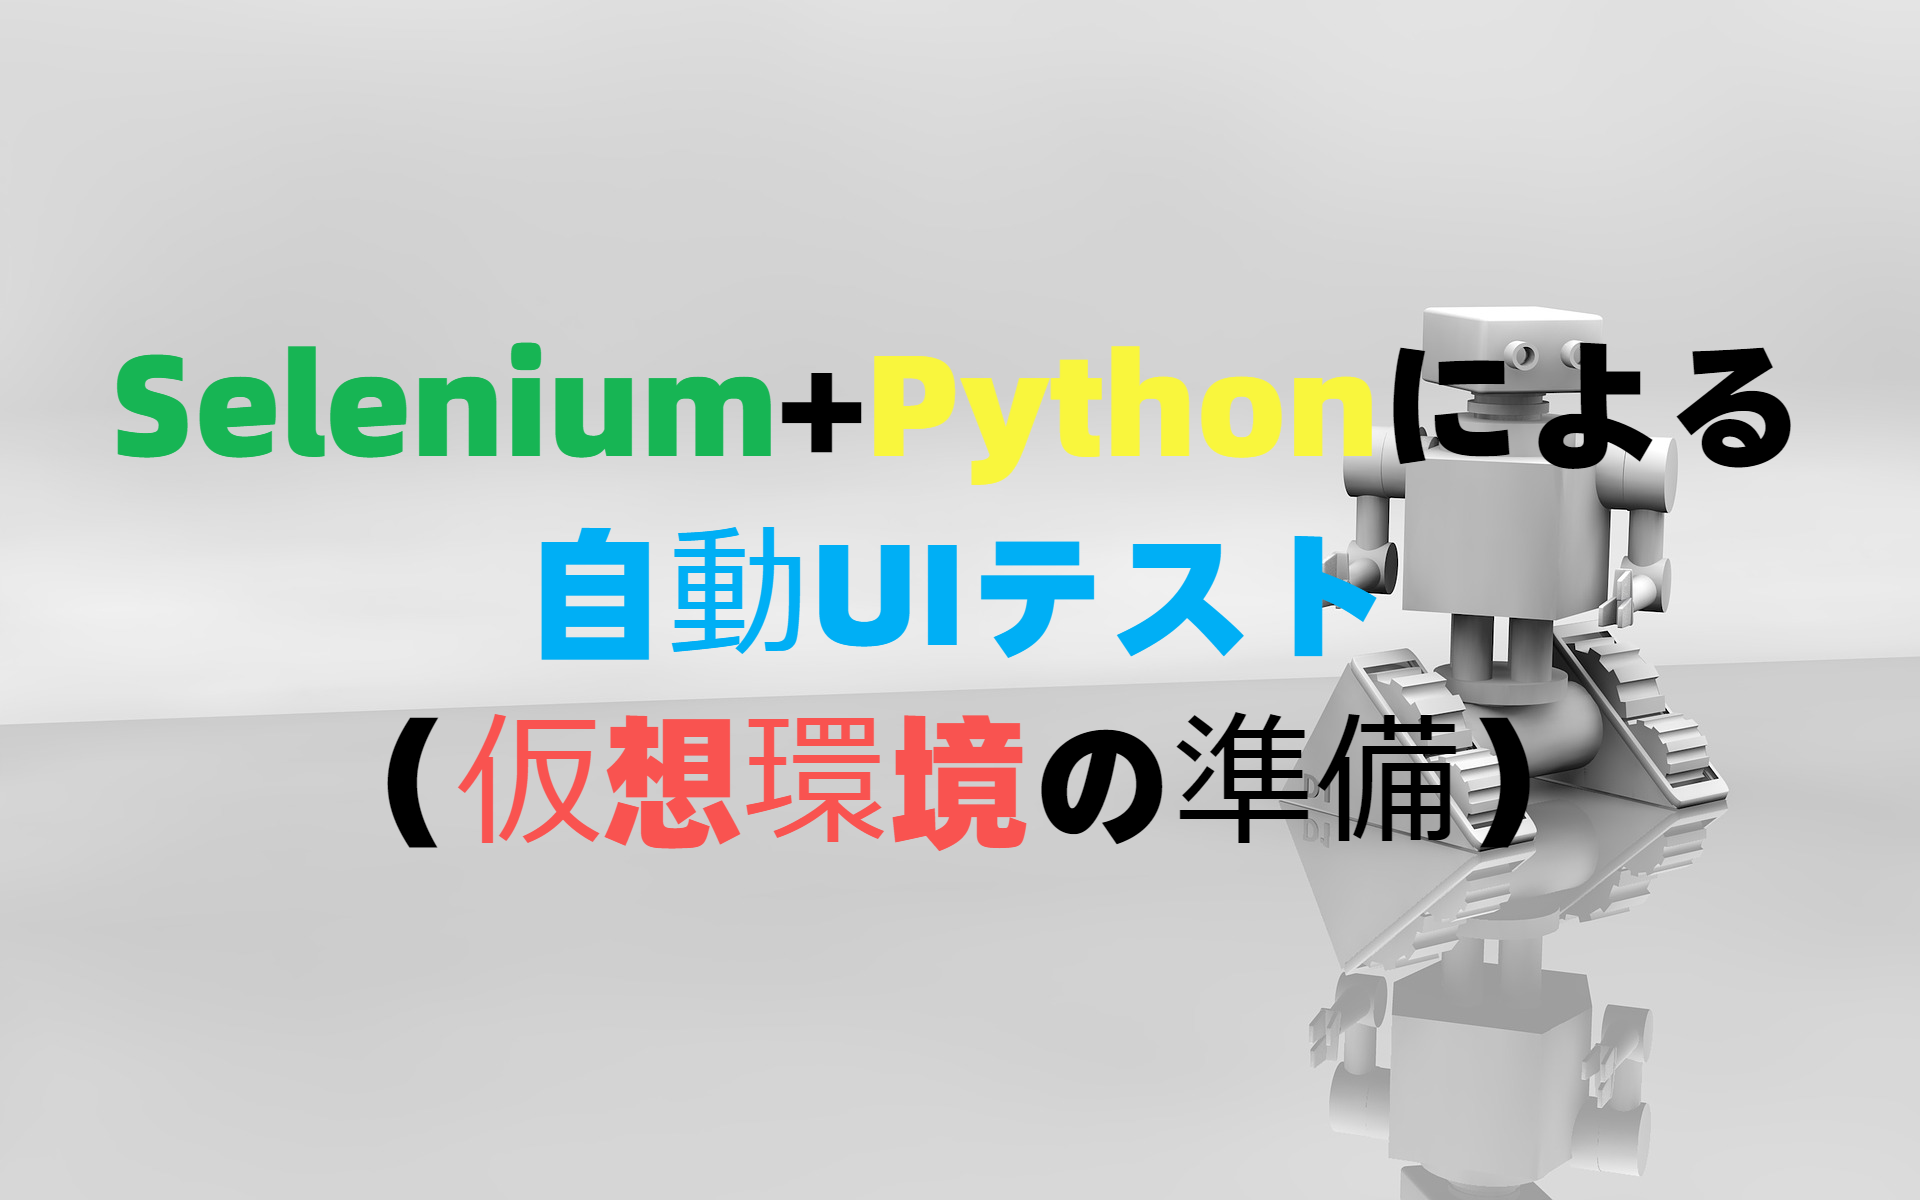 Selenium+pythonによる自動UIテスト（仮想環境の準備）